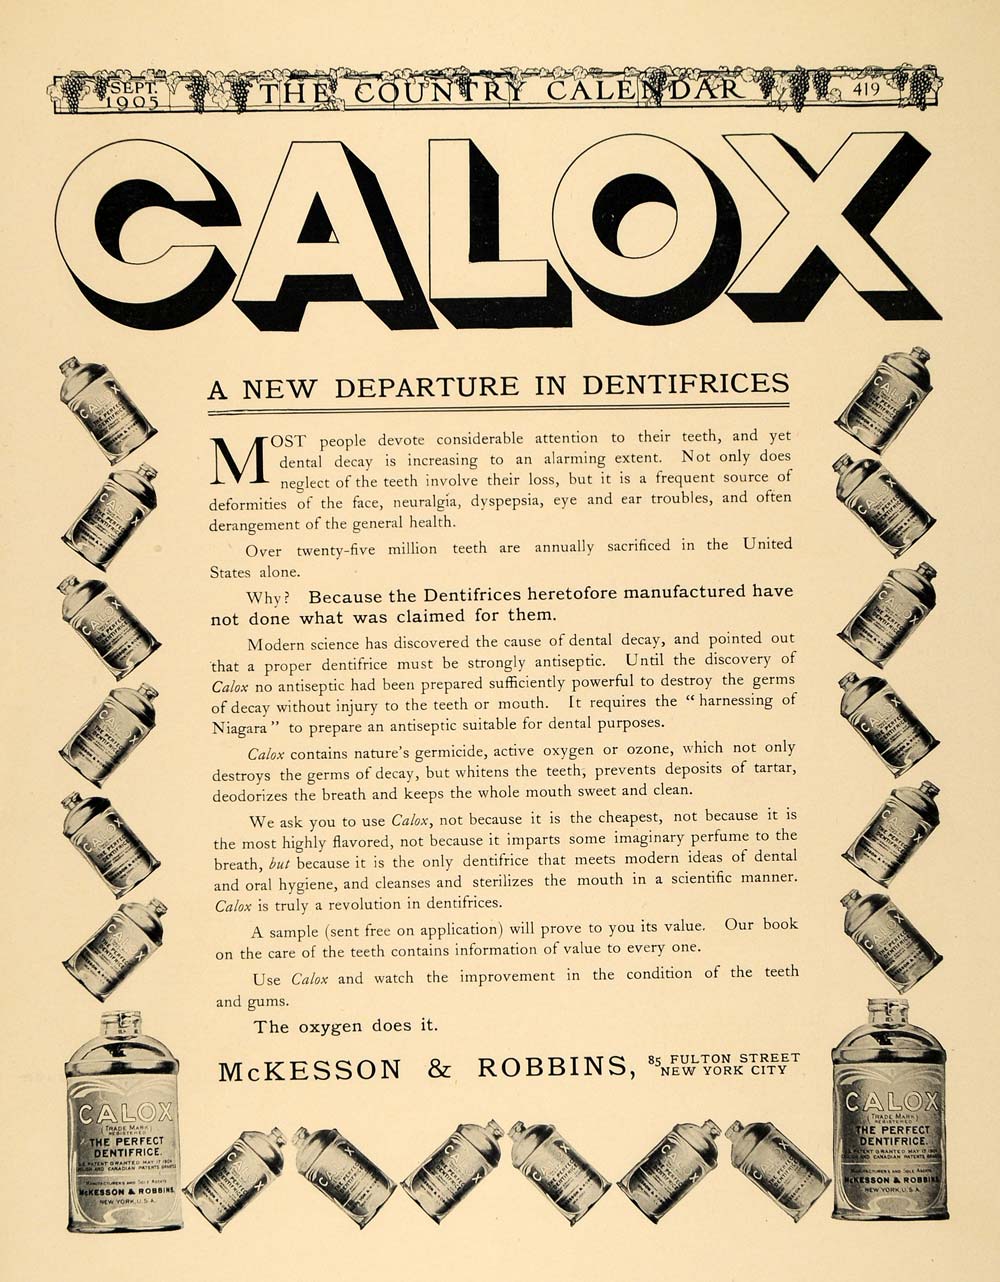 1905 Ad McKesson Robbins Calox Dentifrice Oral Hygiene - ORIGINAL CC1